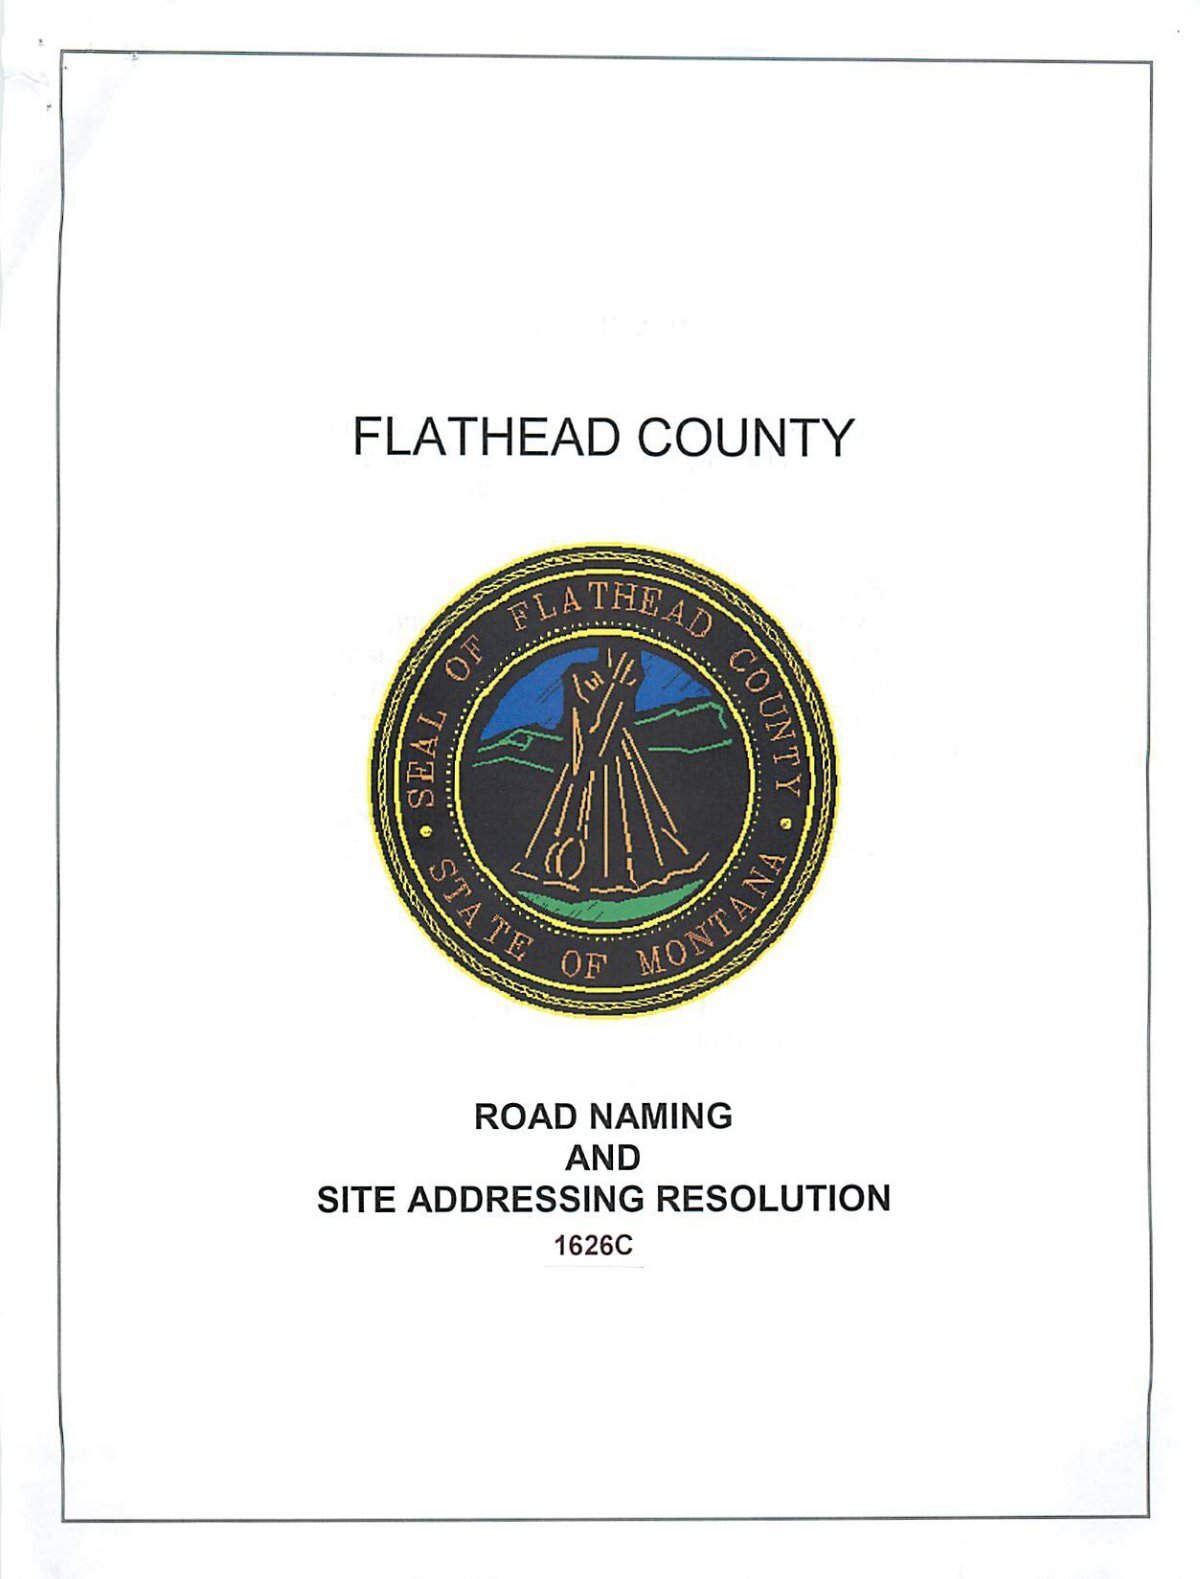 Resolution 1626c - Flathead County, Montana